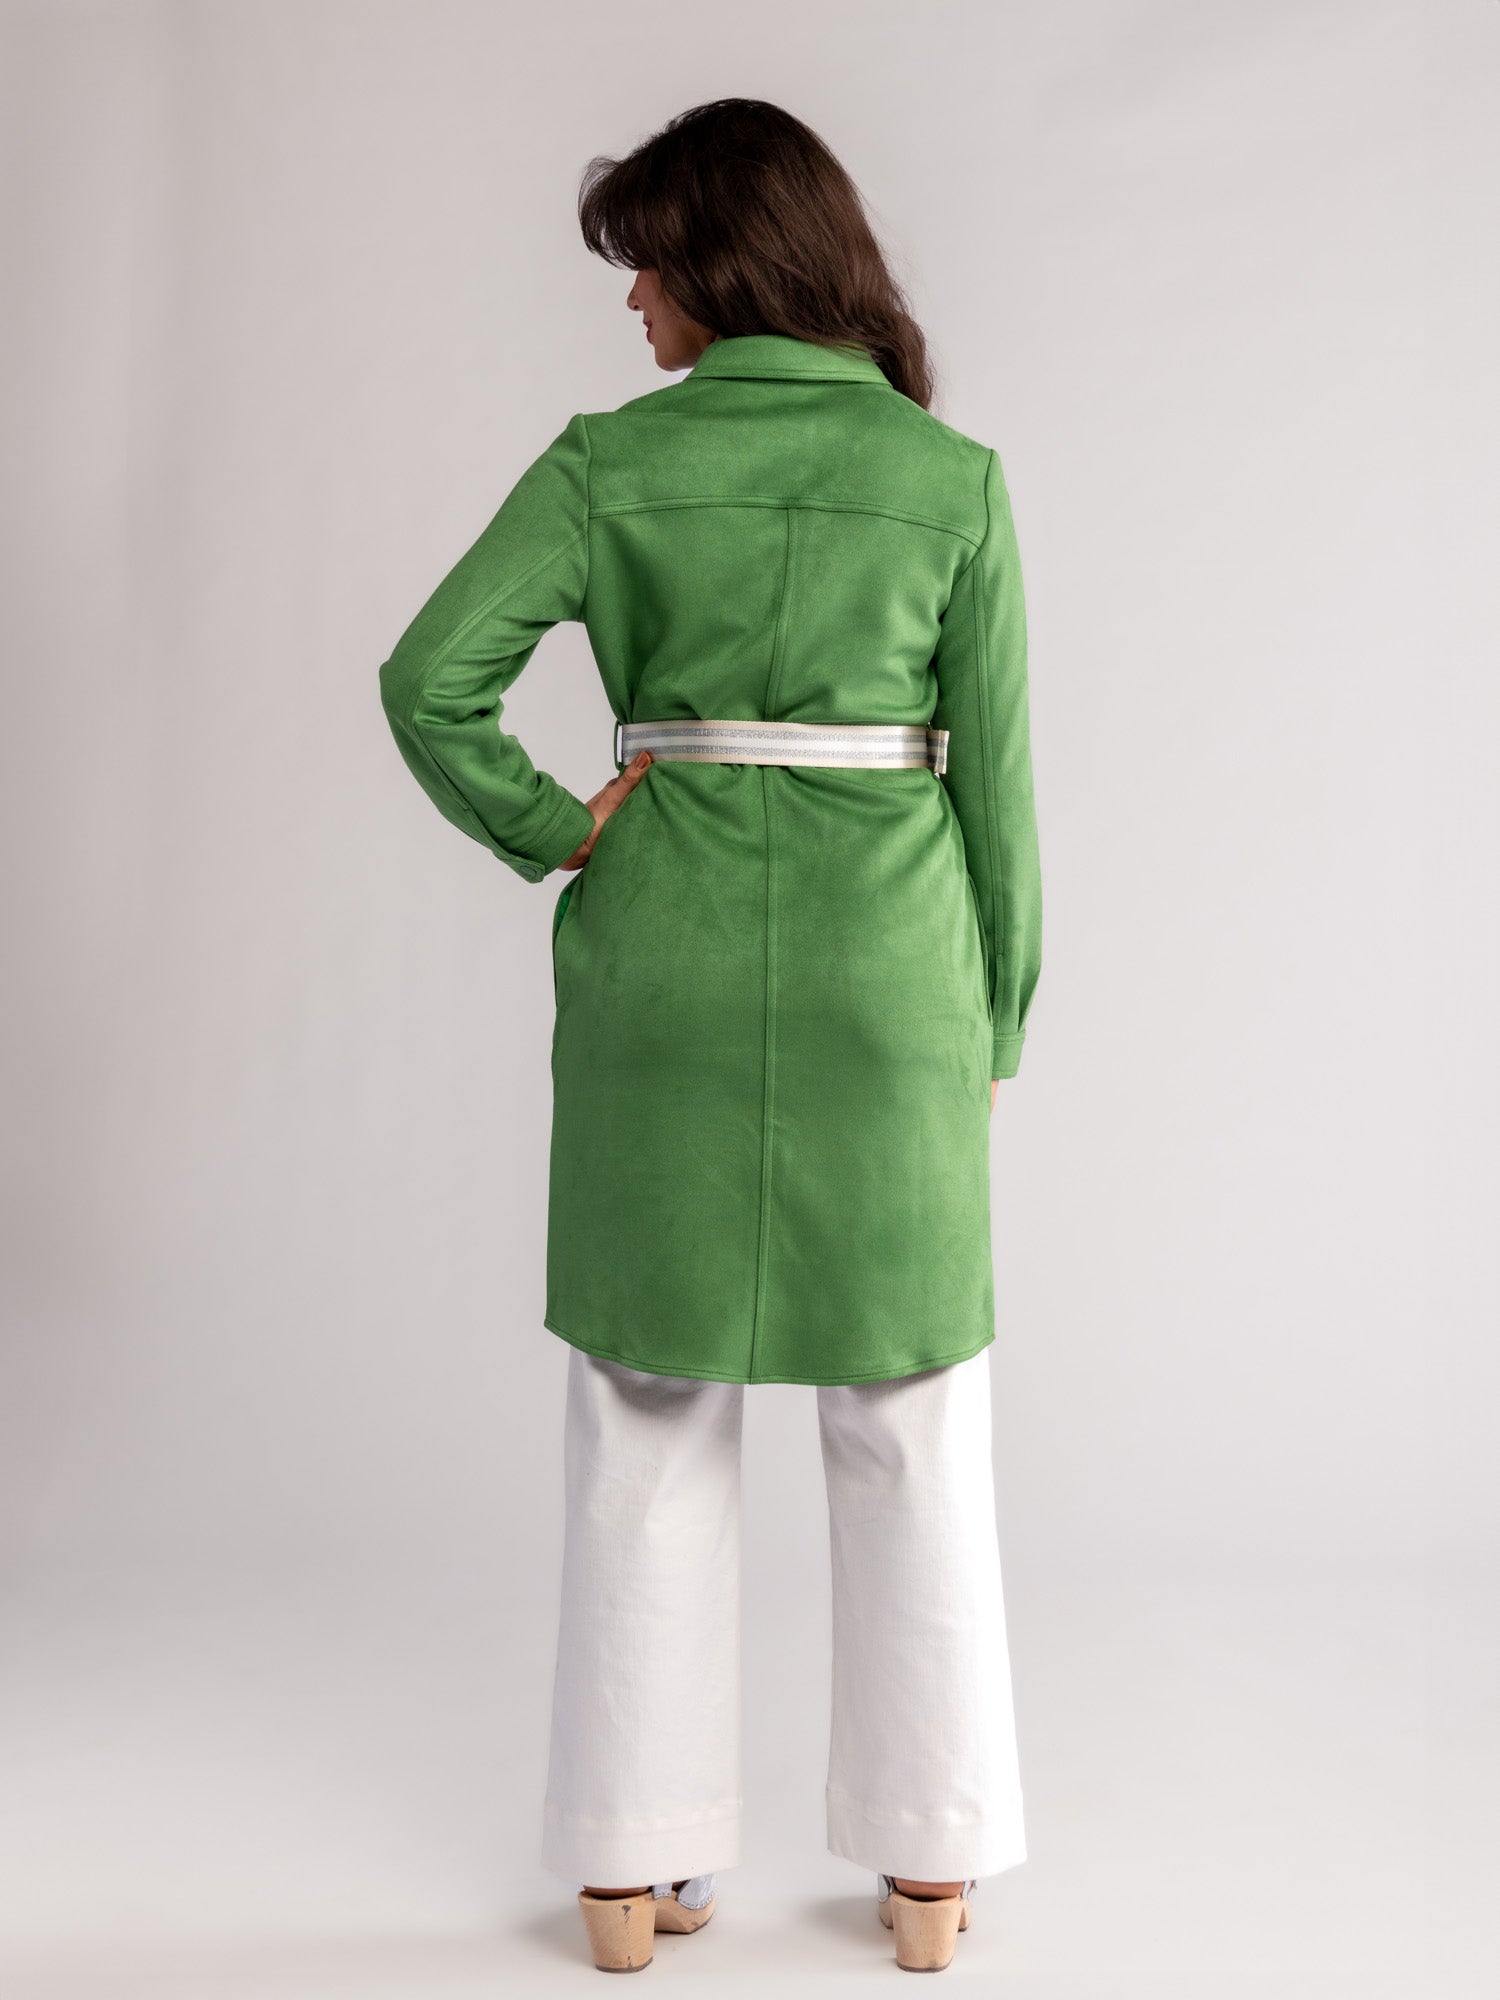 MAYA shirtdress Green Faux Suede - Lesley Evers-Best Seller-collared dress-Dress